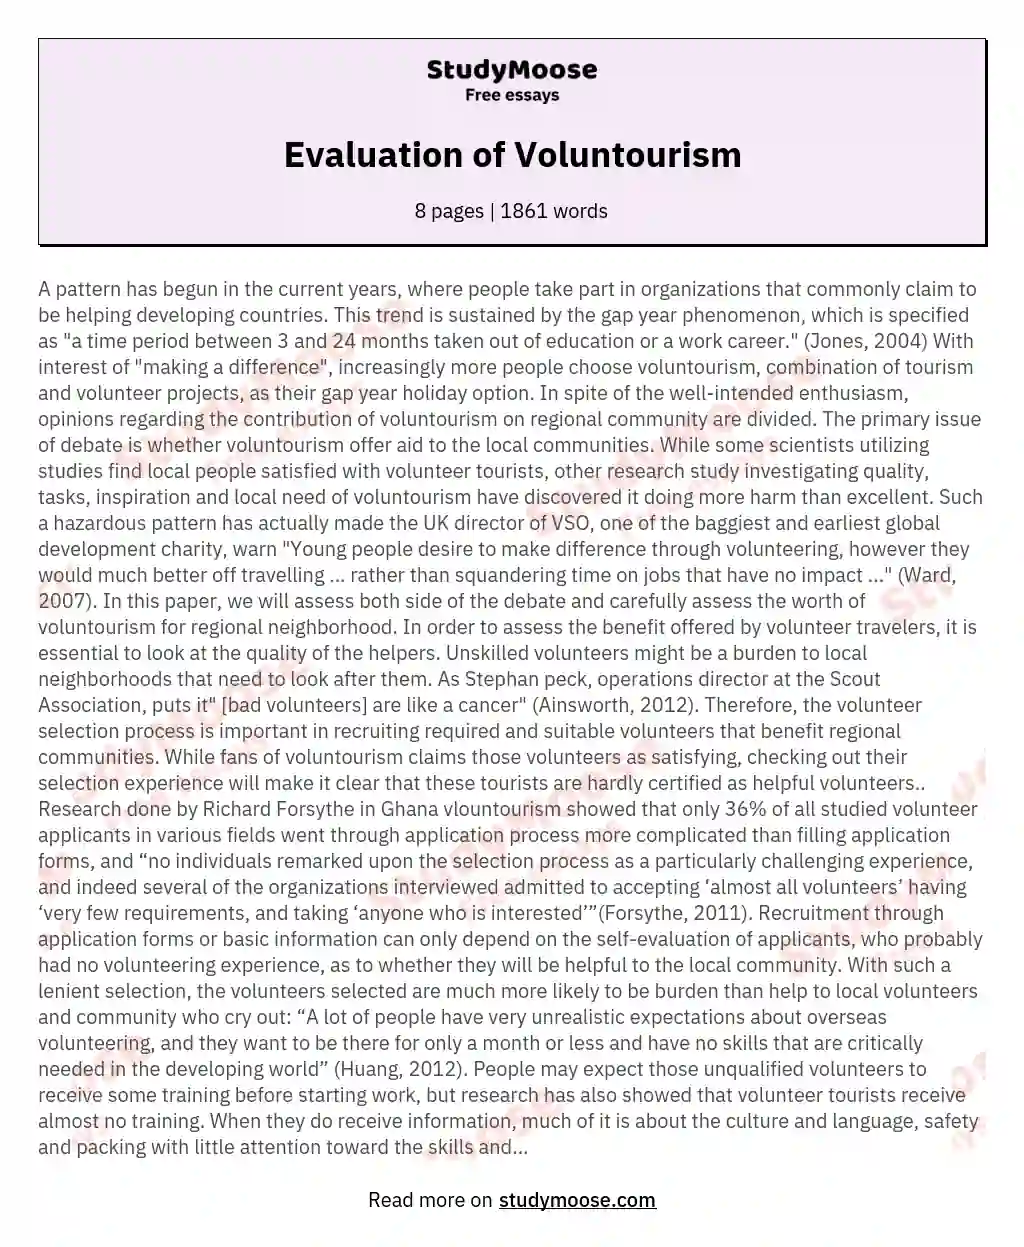 Evaluation of Voluntourism